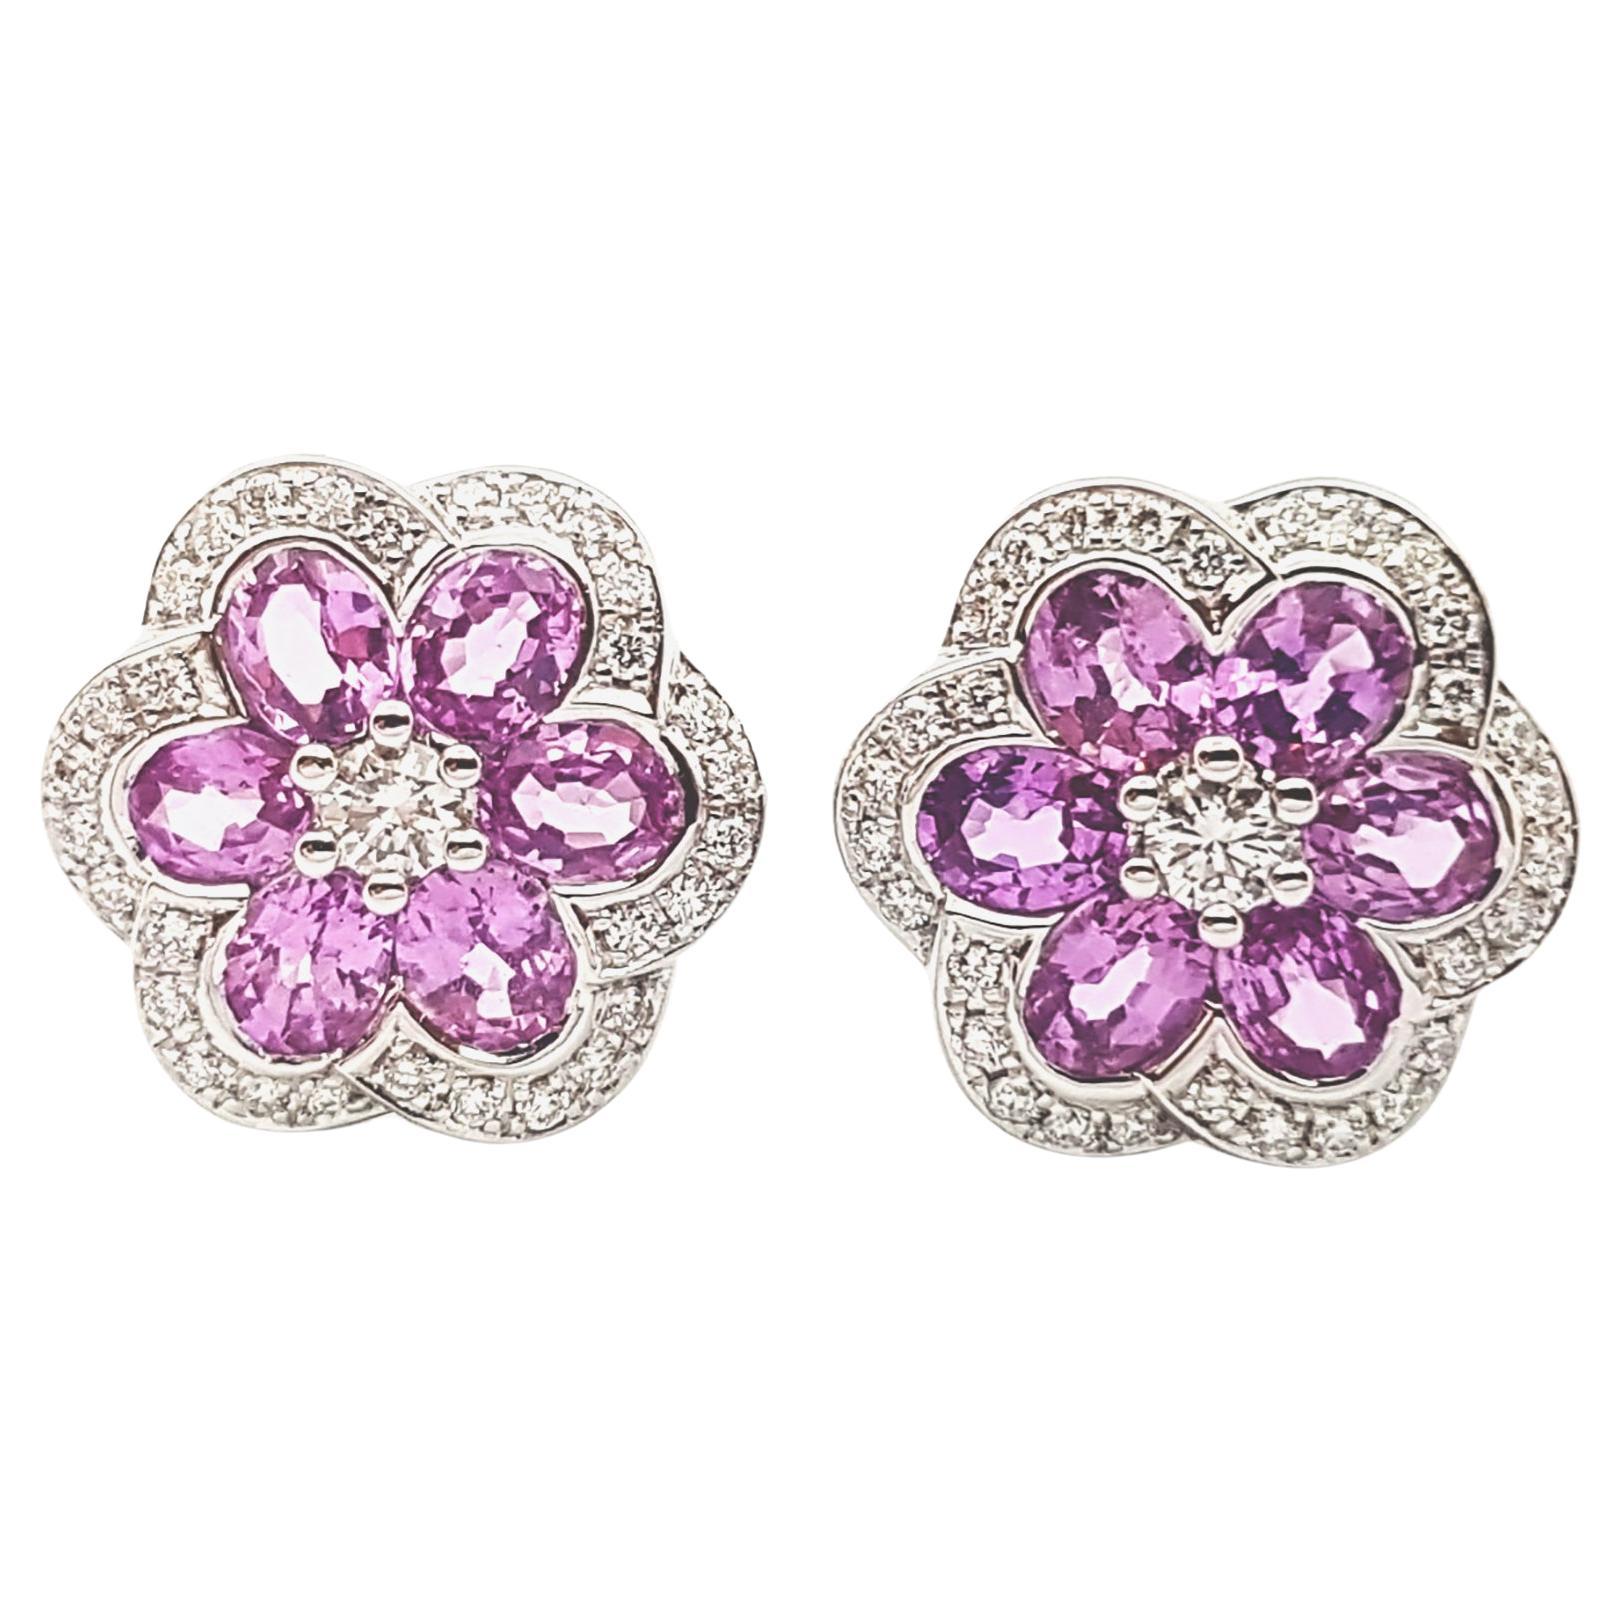 Pink Sapphire with Diamond Flower Earrings set in 18 Karat White Gold Settings